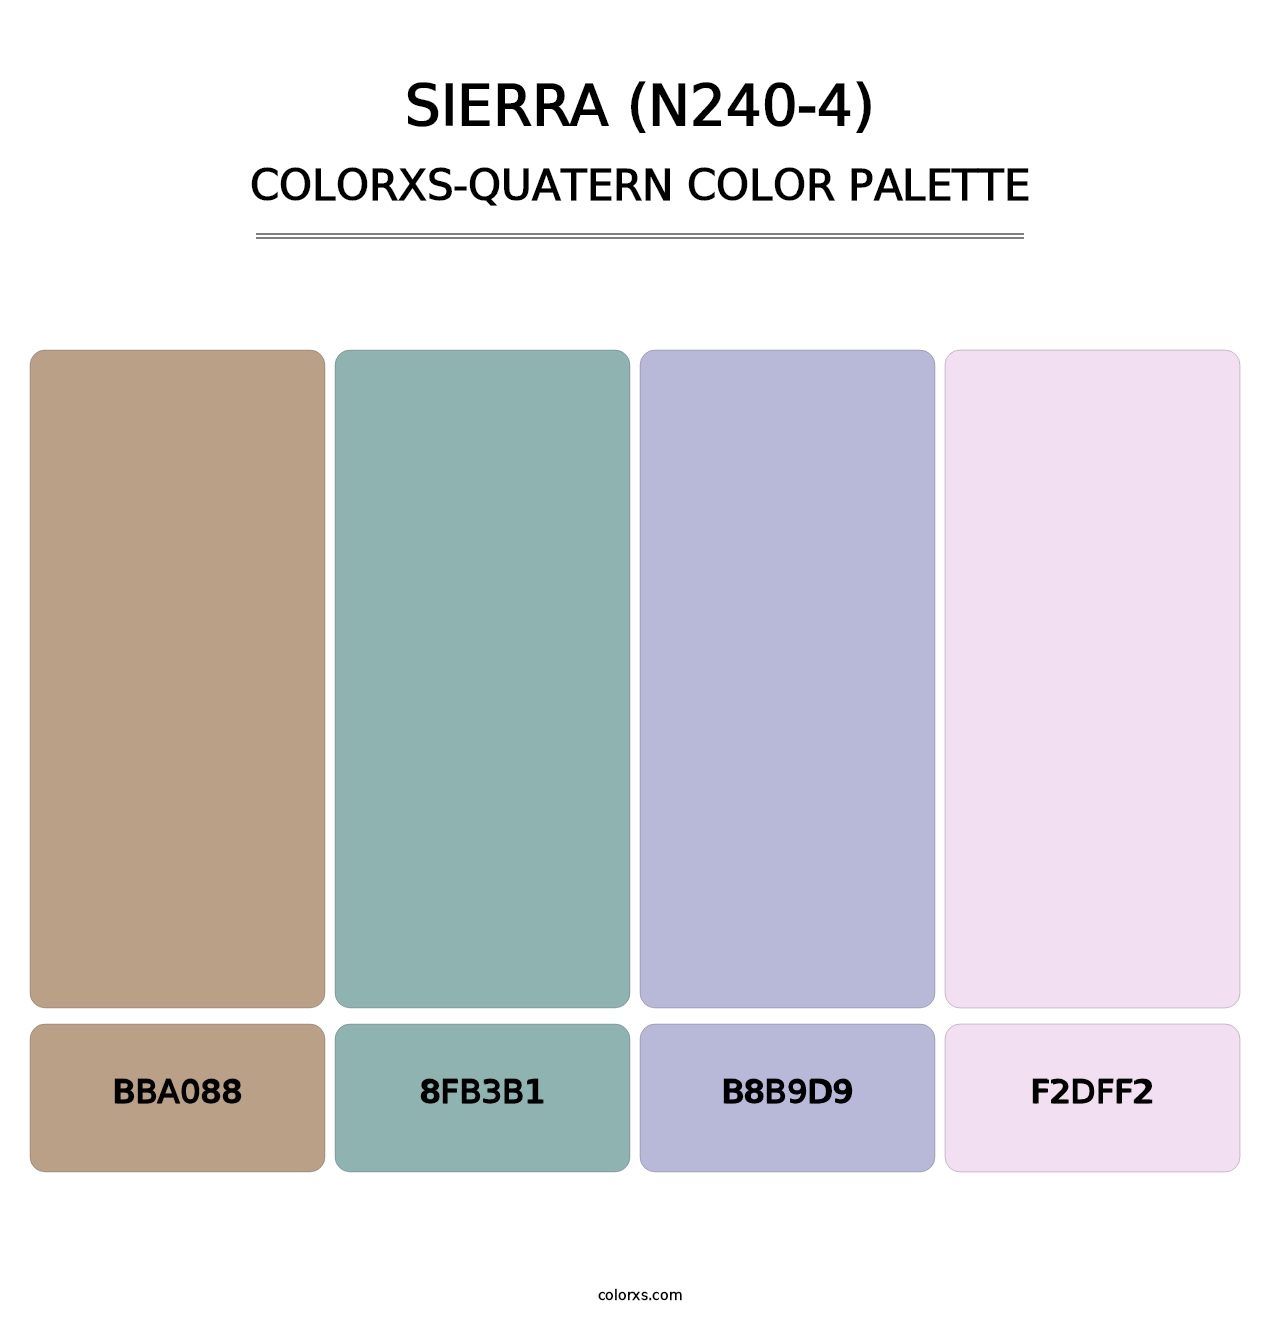 Sierra (N240-4) - Colorxs Quatern Palette